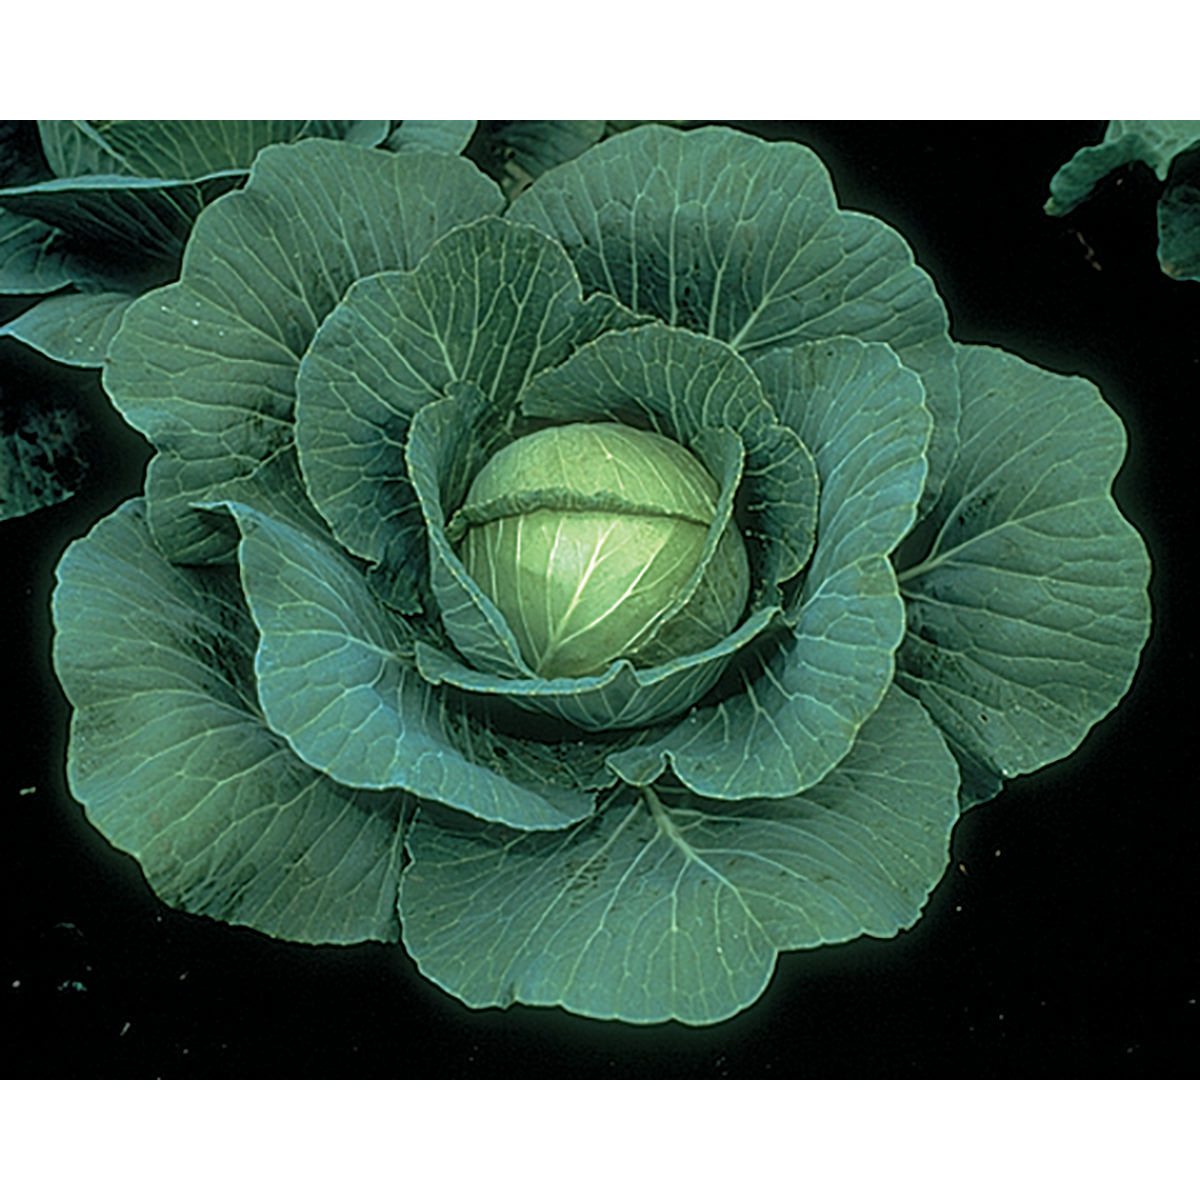 Charmant F1 Hybrid Cabbage Seeds